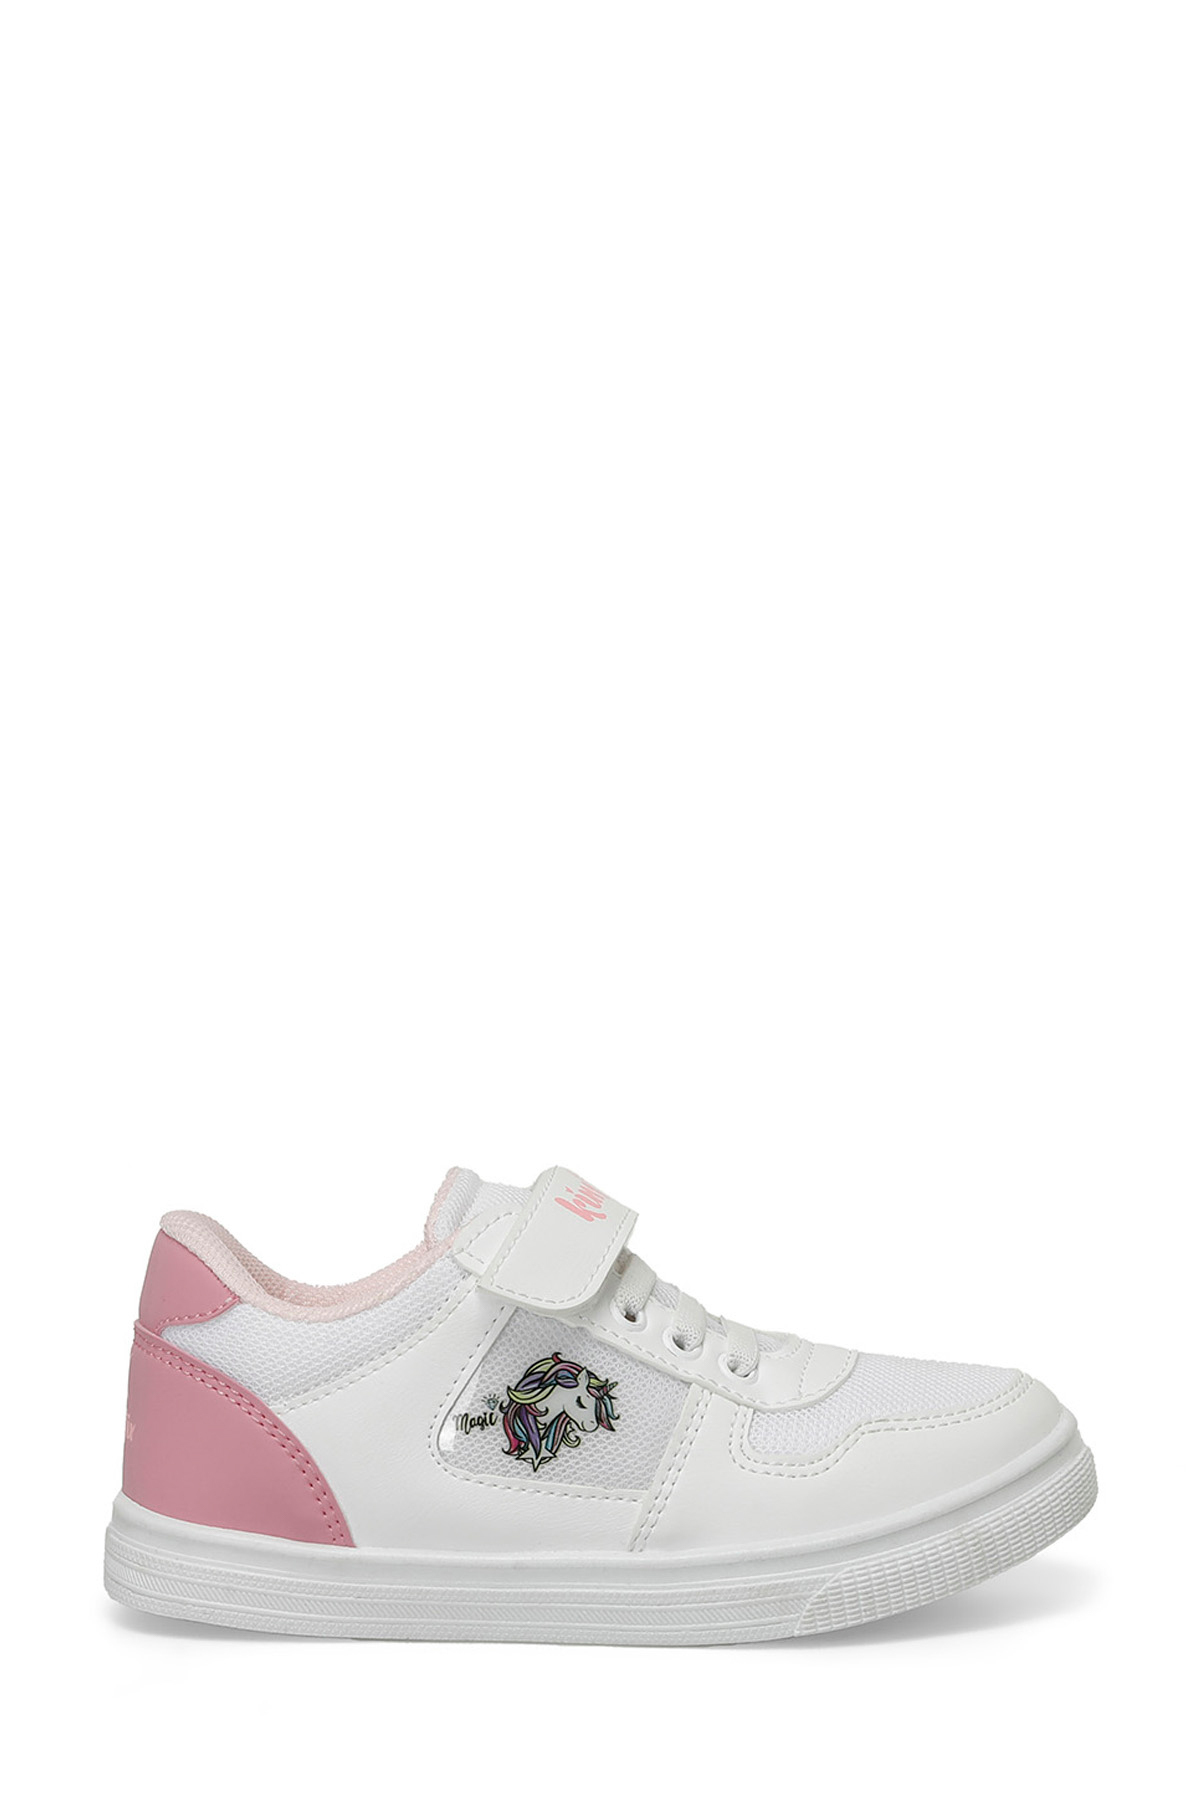 KINETIX FERMO 4FX Girls White Sneaker